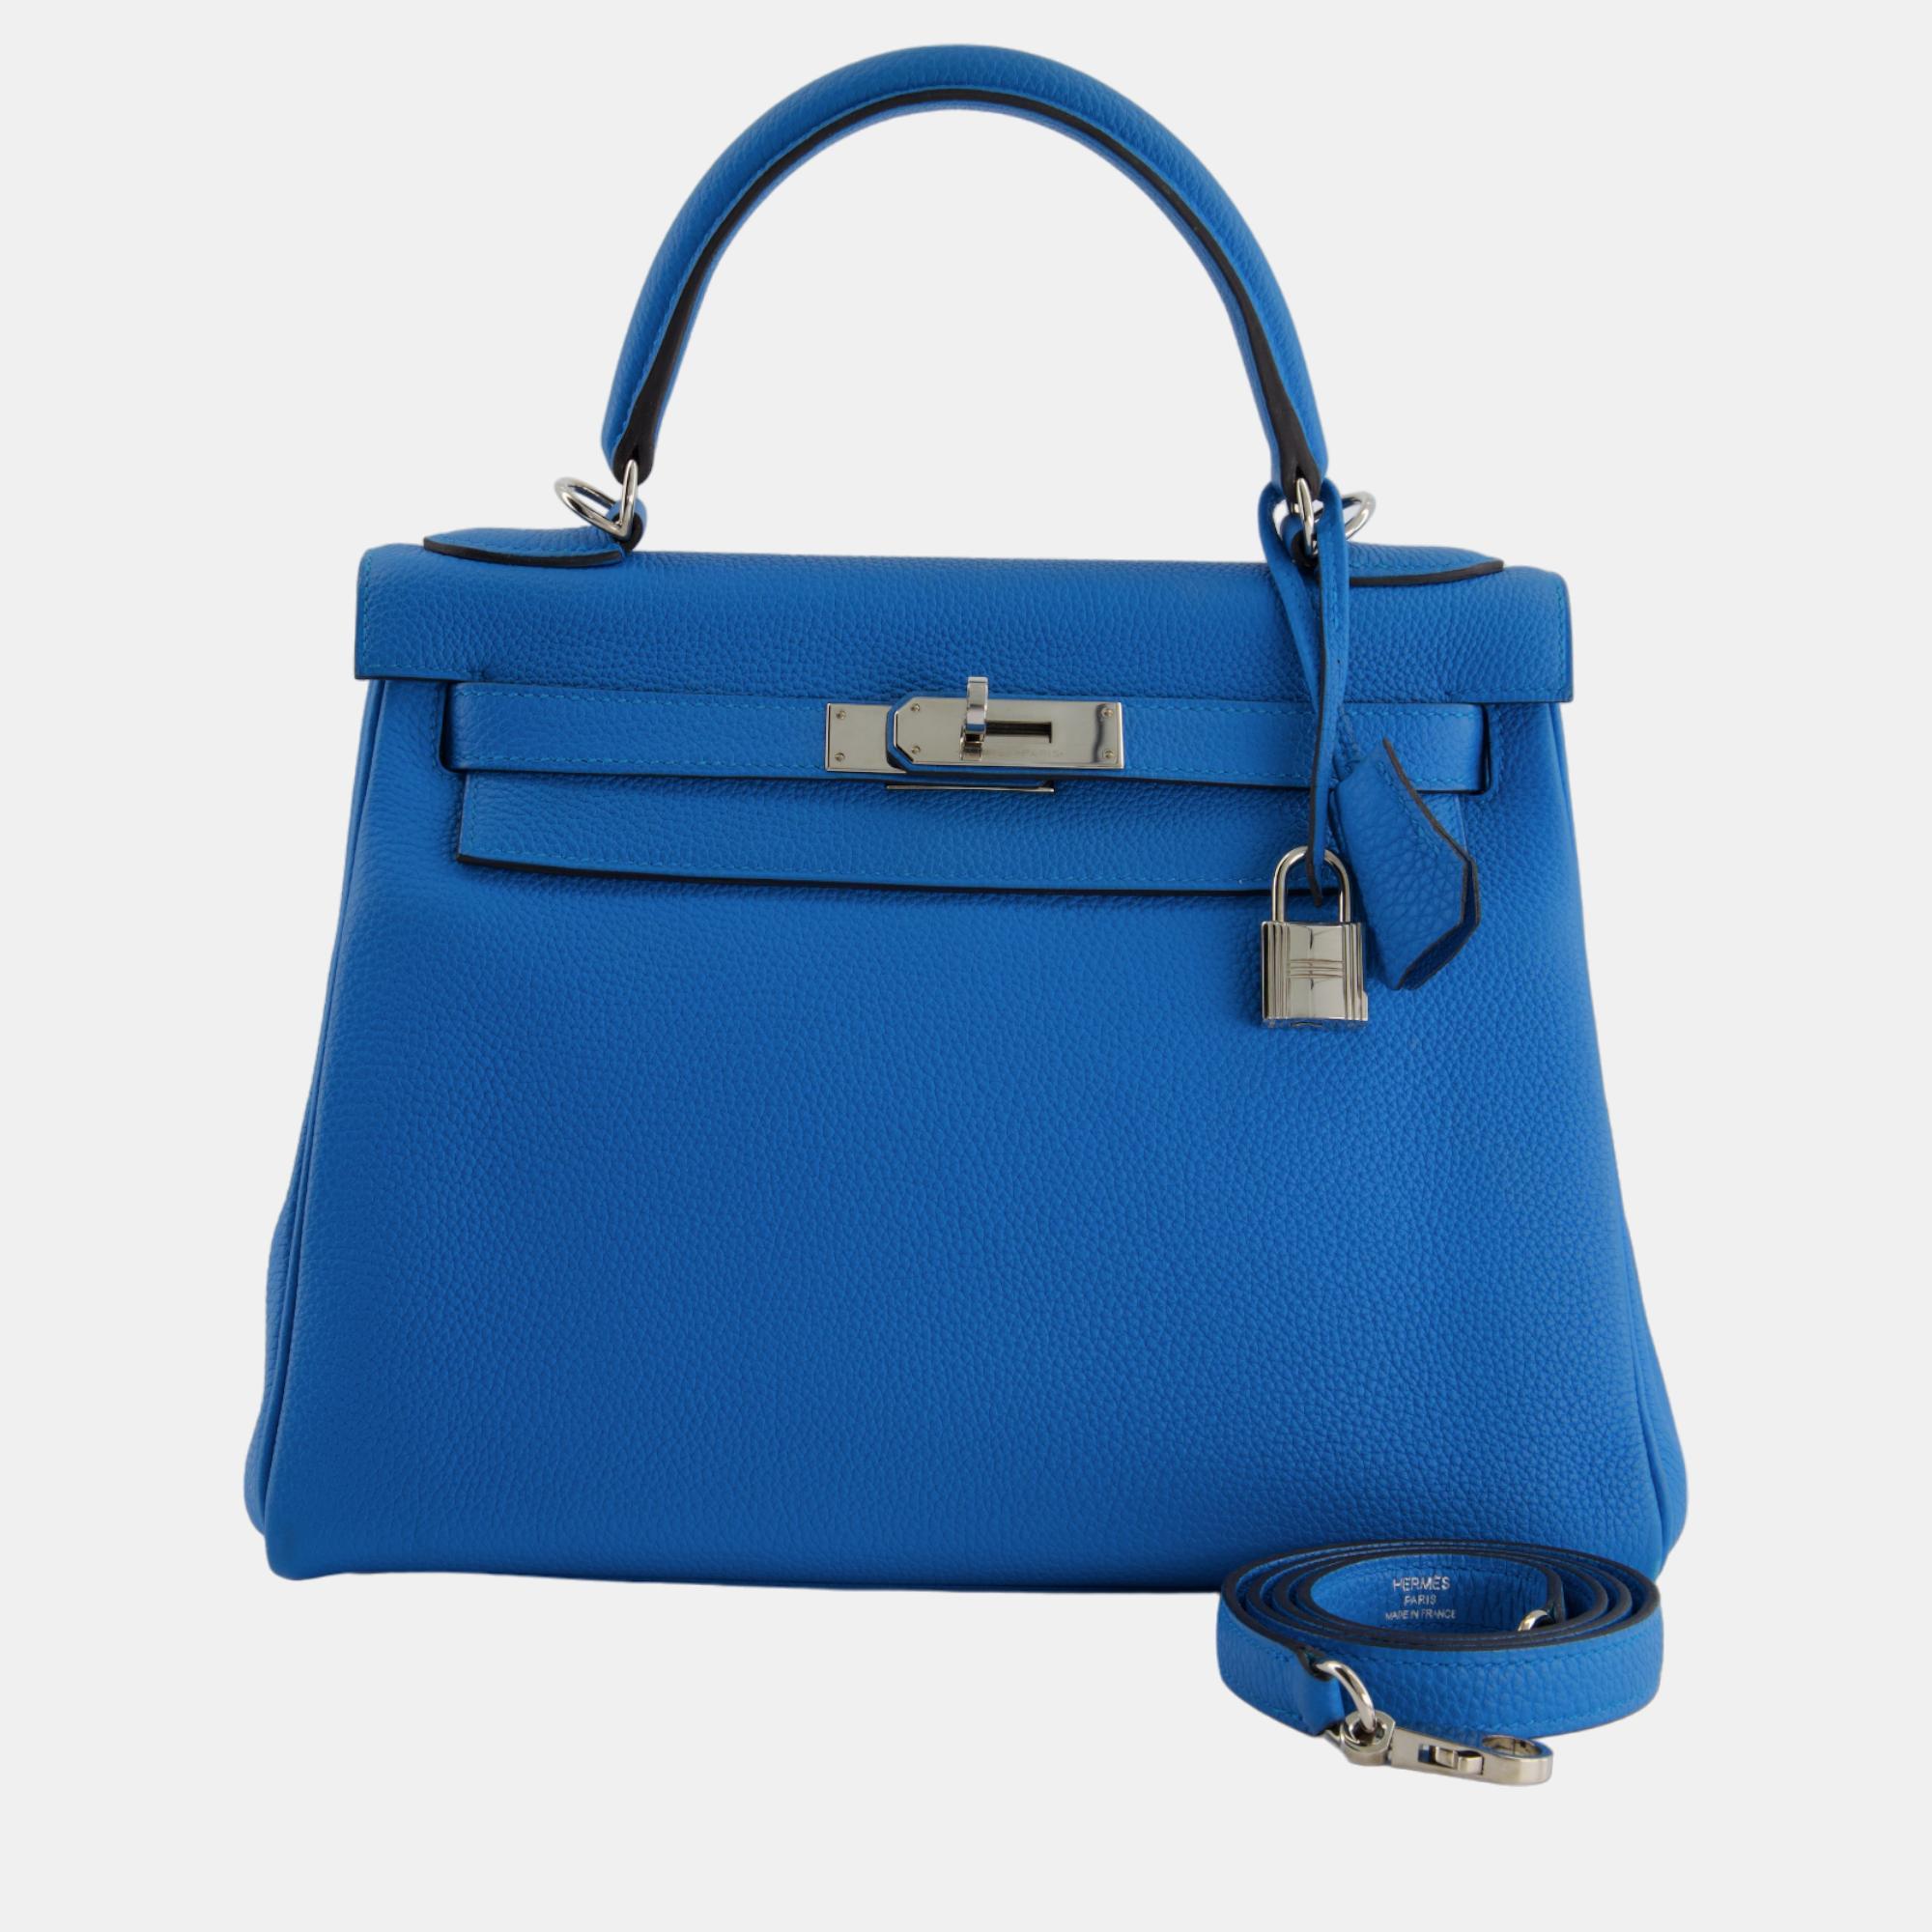 Hermes Kelly Retourne 28cm Bag In Bleu Zanzibar Togo Leather With Palladium Hardware